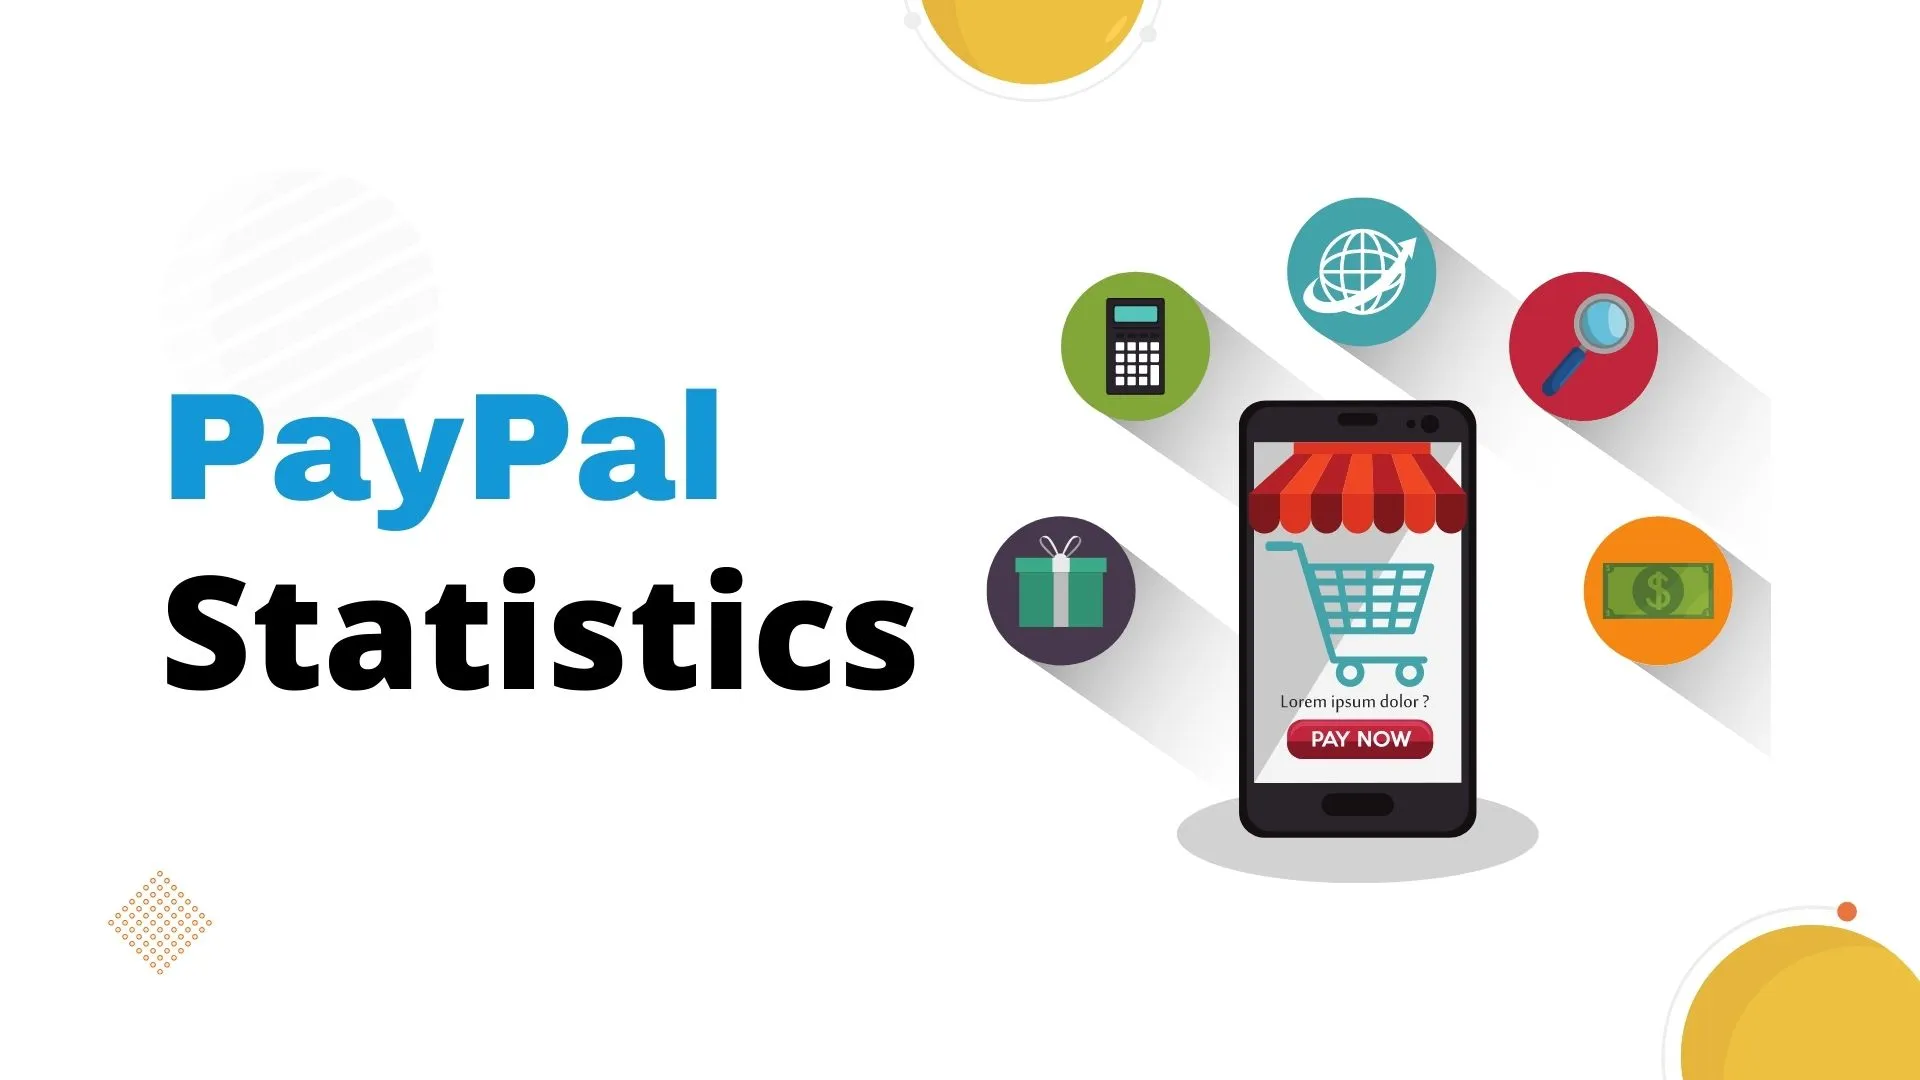 PayPal Statistics